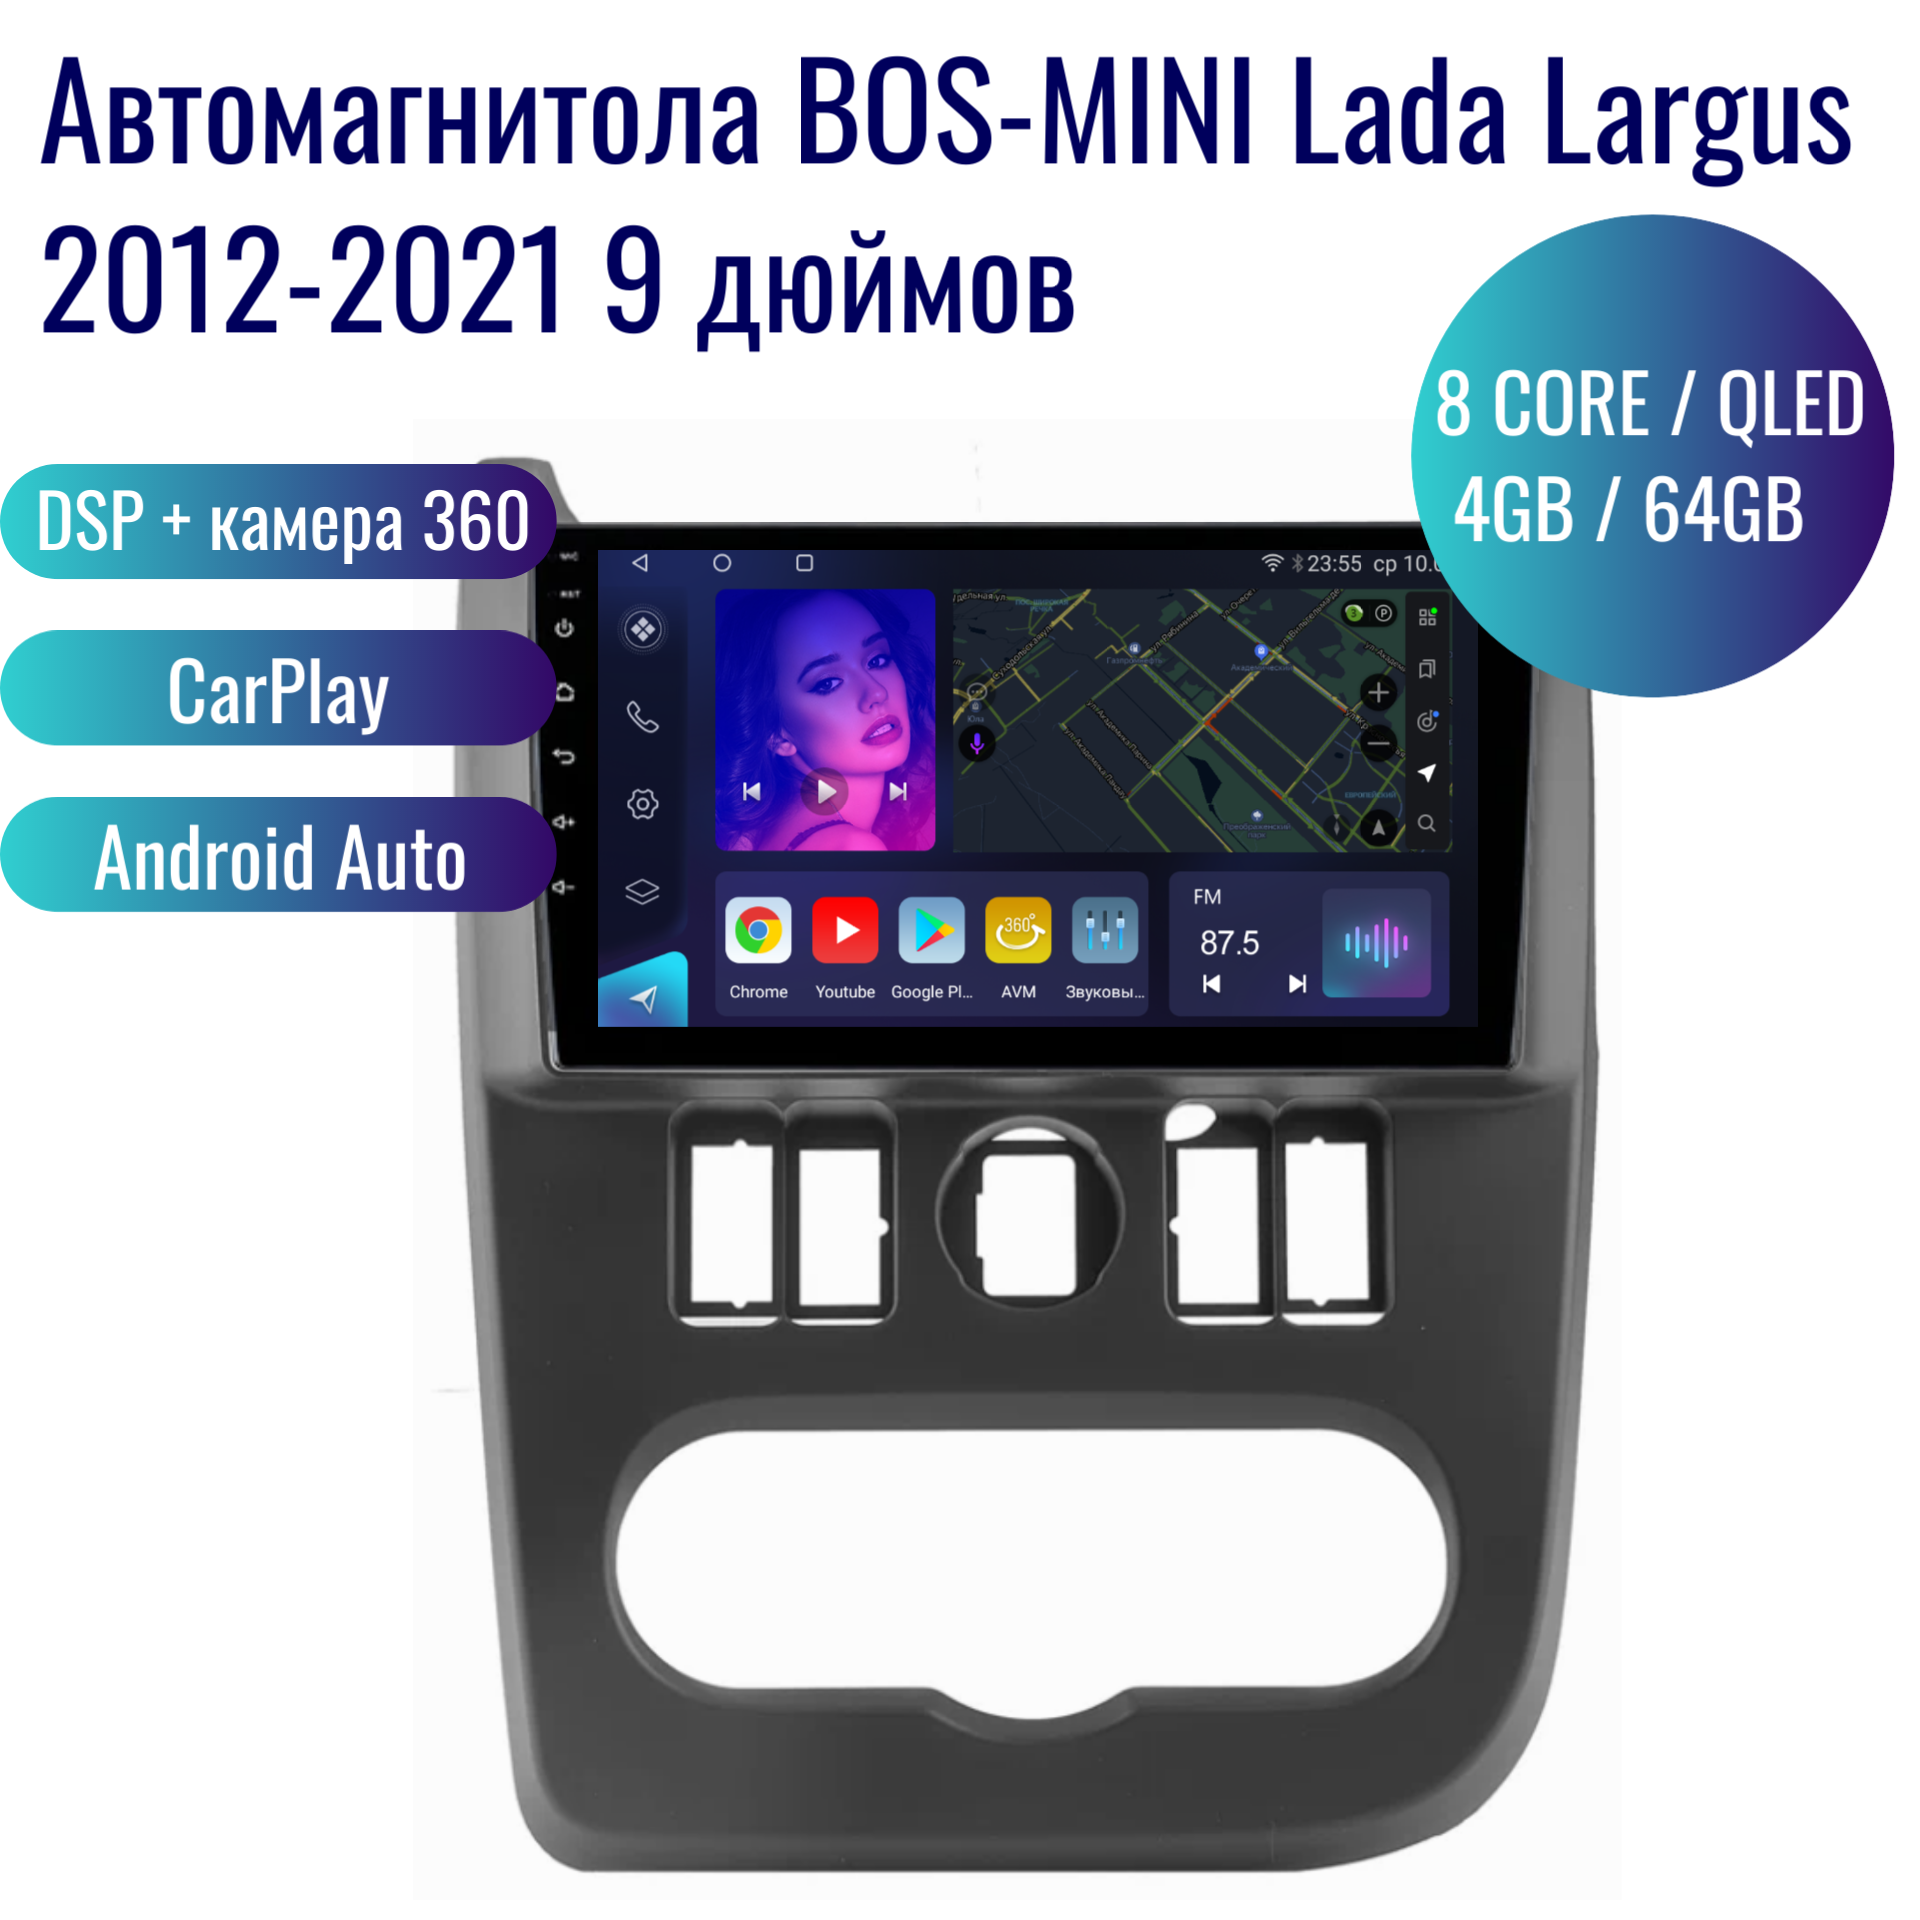 Автомагнитола BOS-MINI Android Lada Largus 2012-2021 / 8 ядер 4Gb+64Gb / 9 дюймов / GPS / Bluetooth / Wi-Fi / 2din / навигатор / CarPlay AndroidAuto